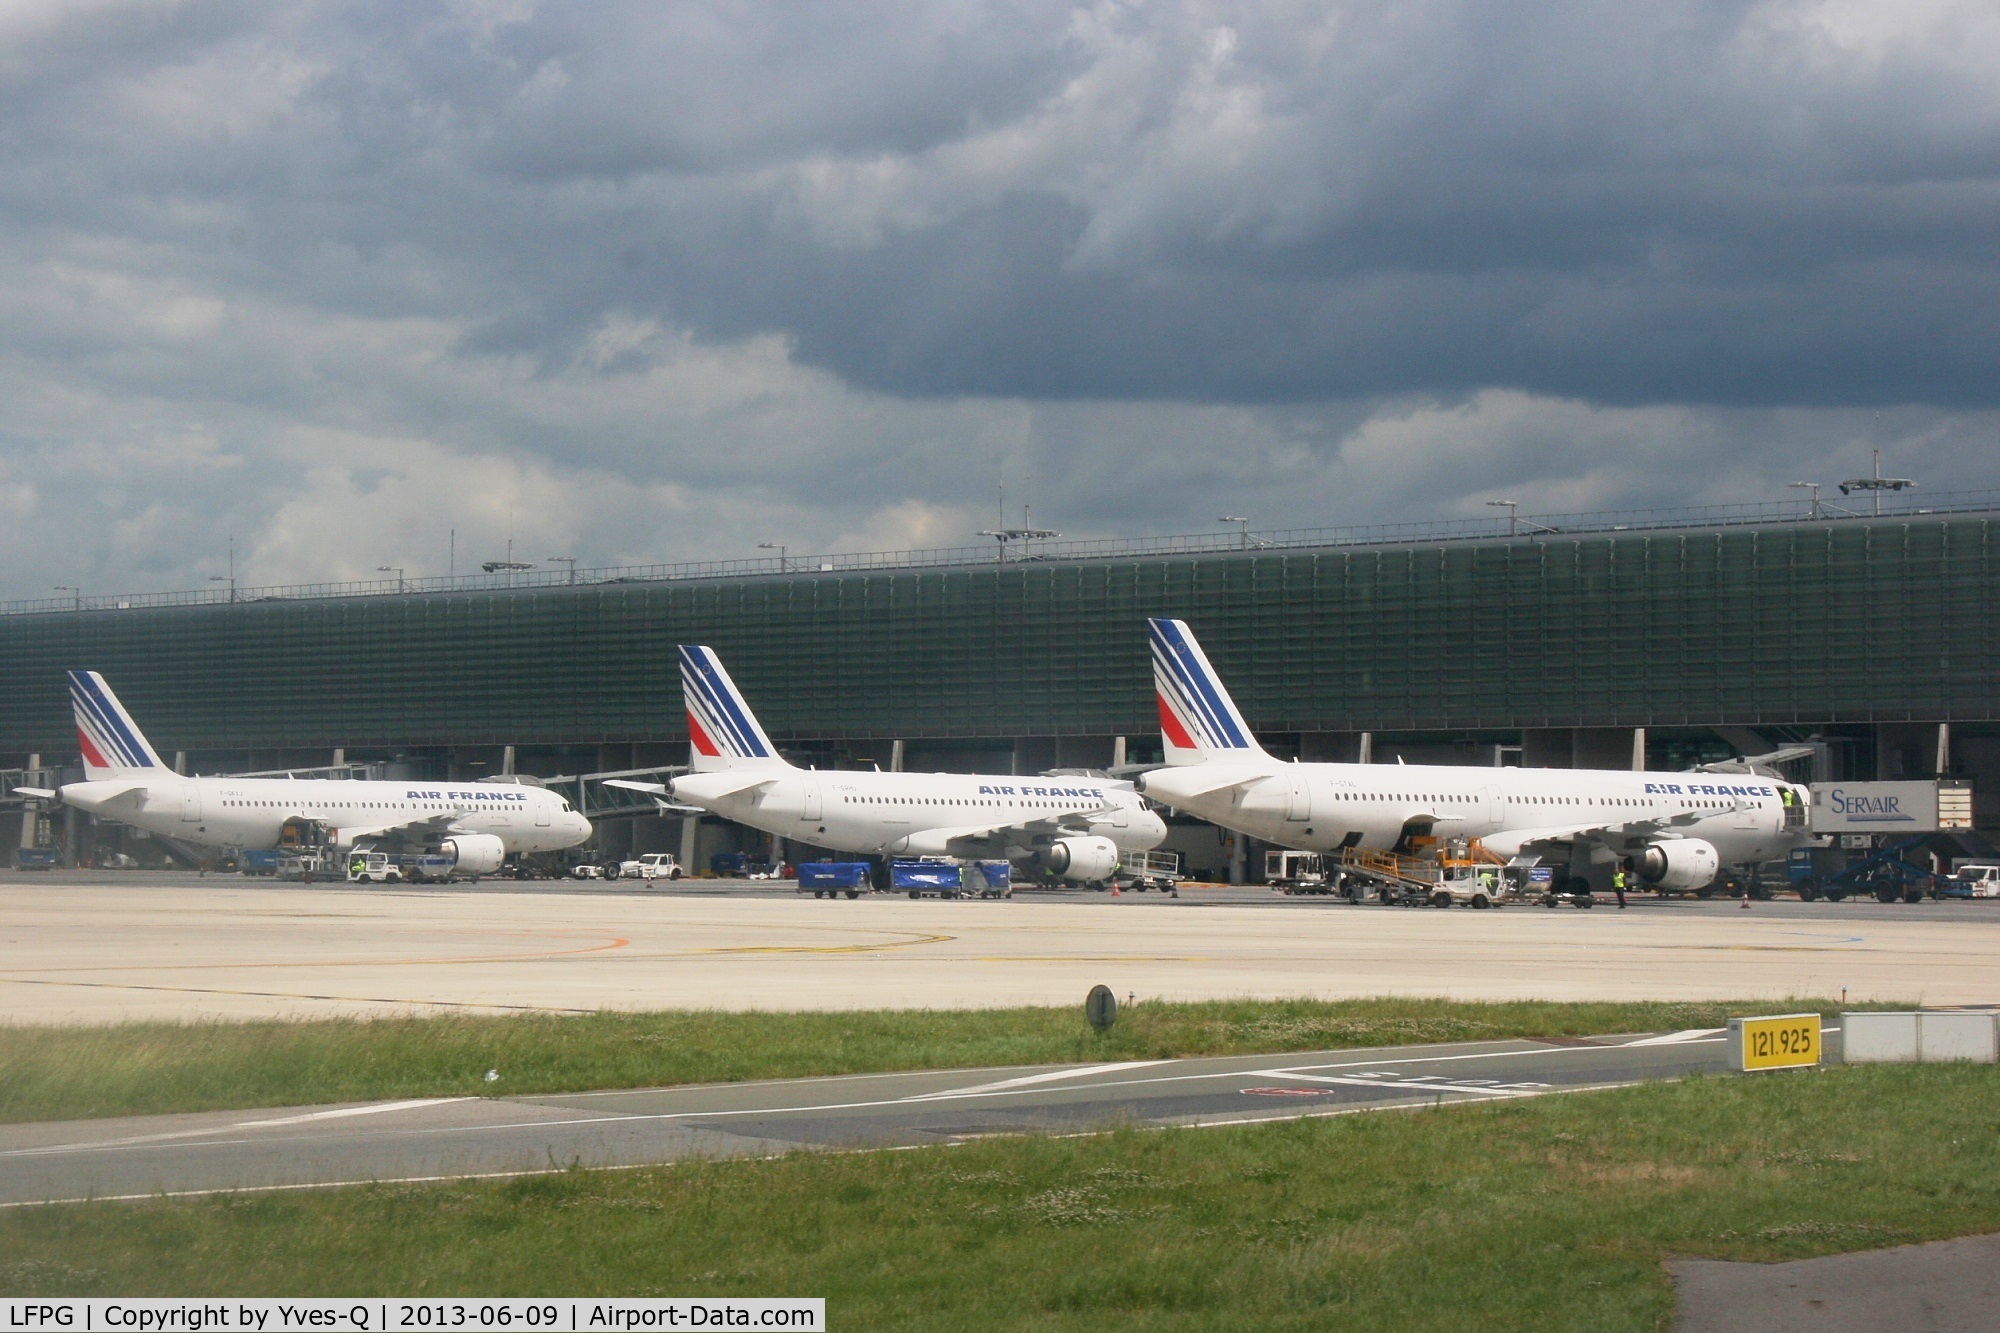 Paris Charles de Gaulle Airport (Roissy Airport), Paris France (LFPG) - Hall K, Roissy Charles De Gaulle Airport (LFPG-CDG)